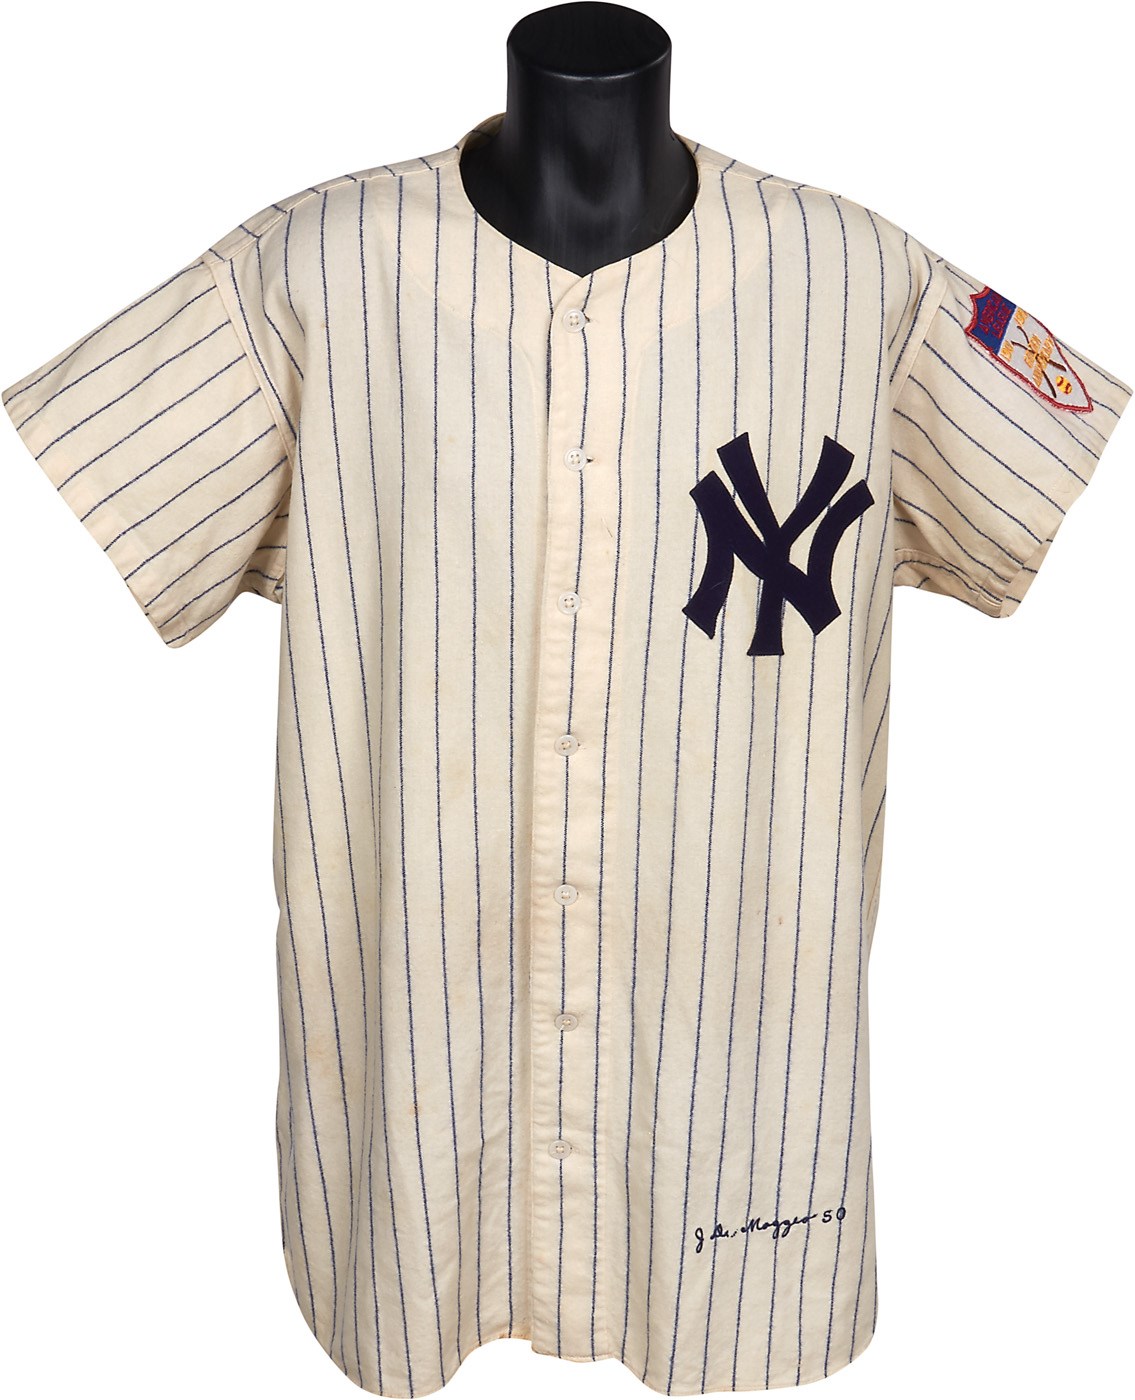 - 1950-51 Joe DiMaggio New York Yankees Game Worn Uniform - Photo-Matched (MEARS A8)